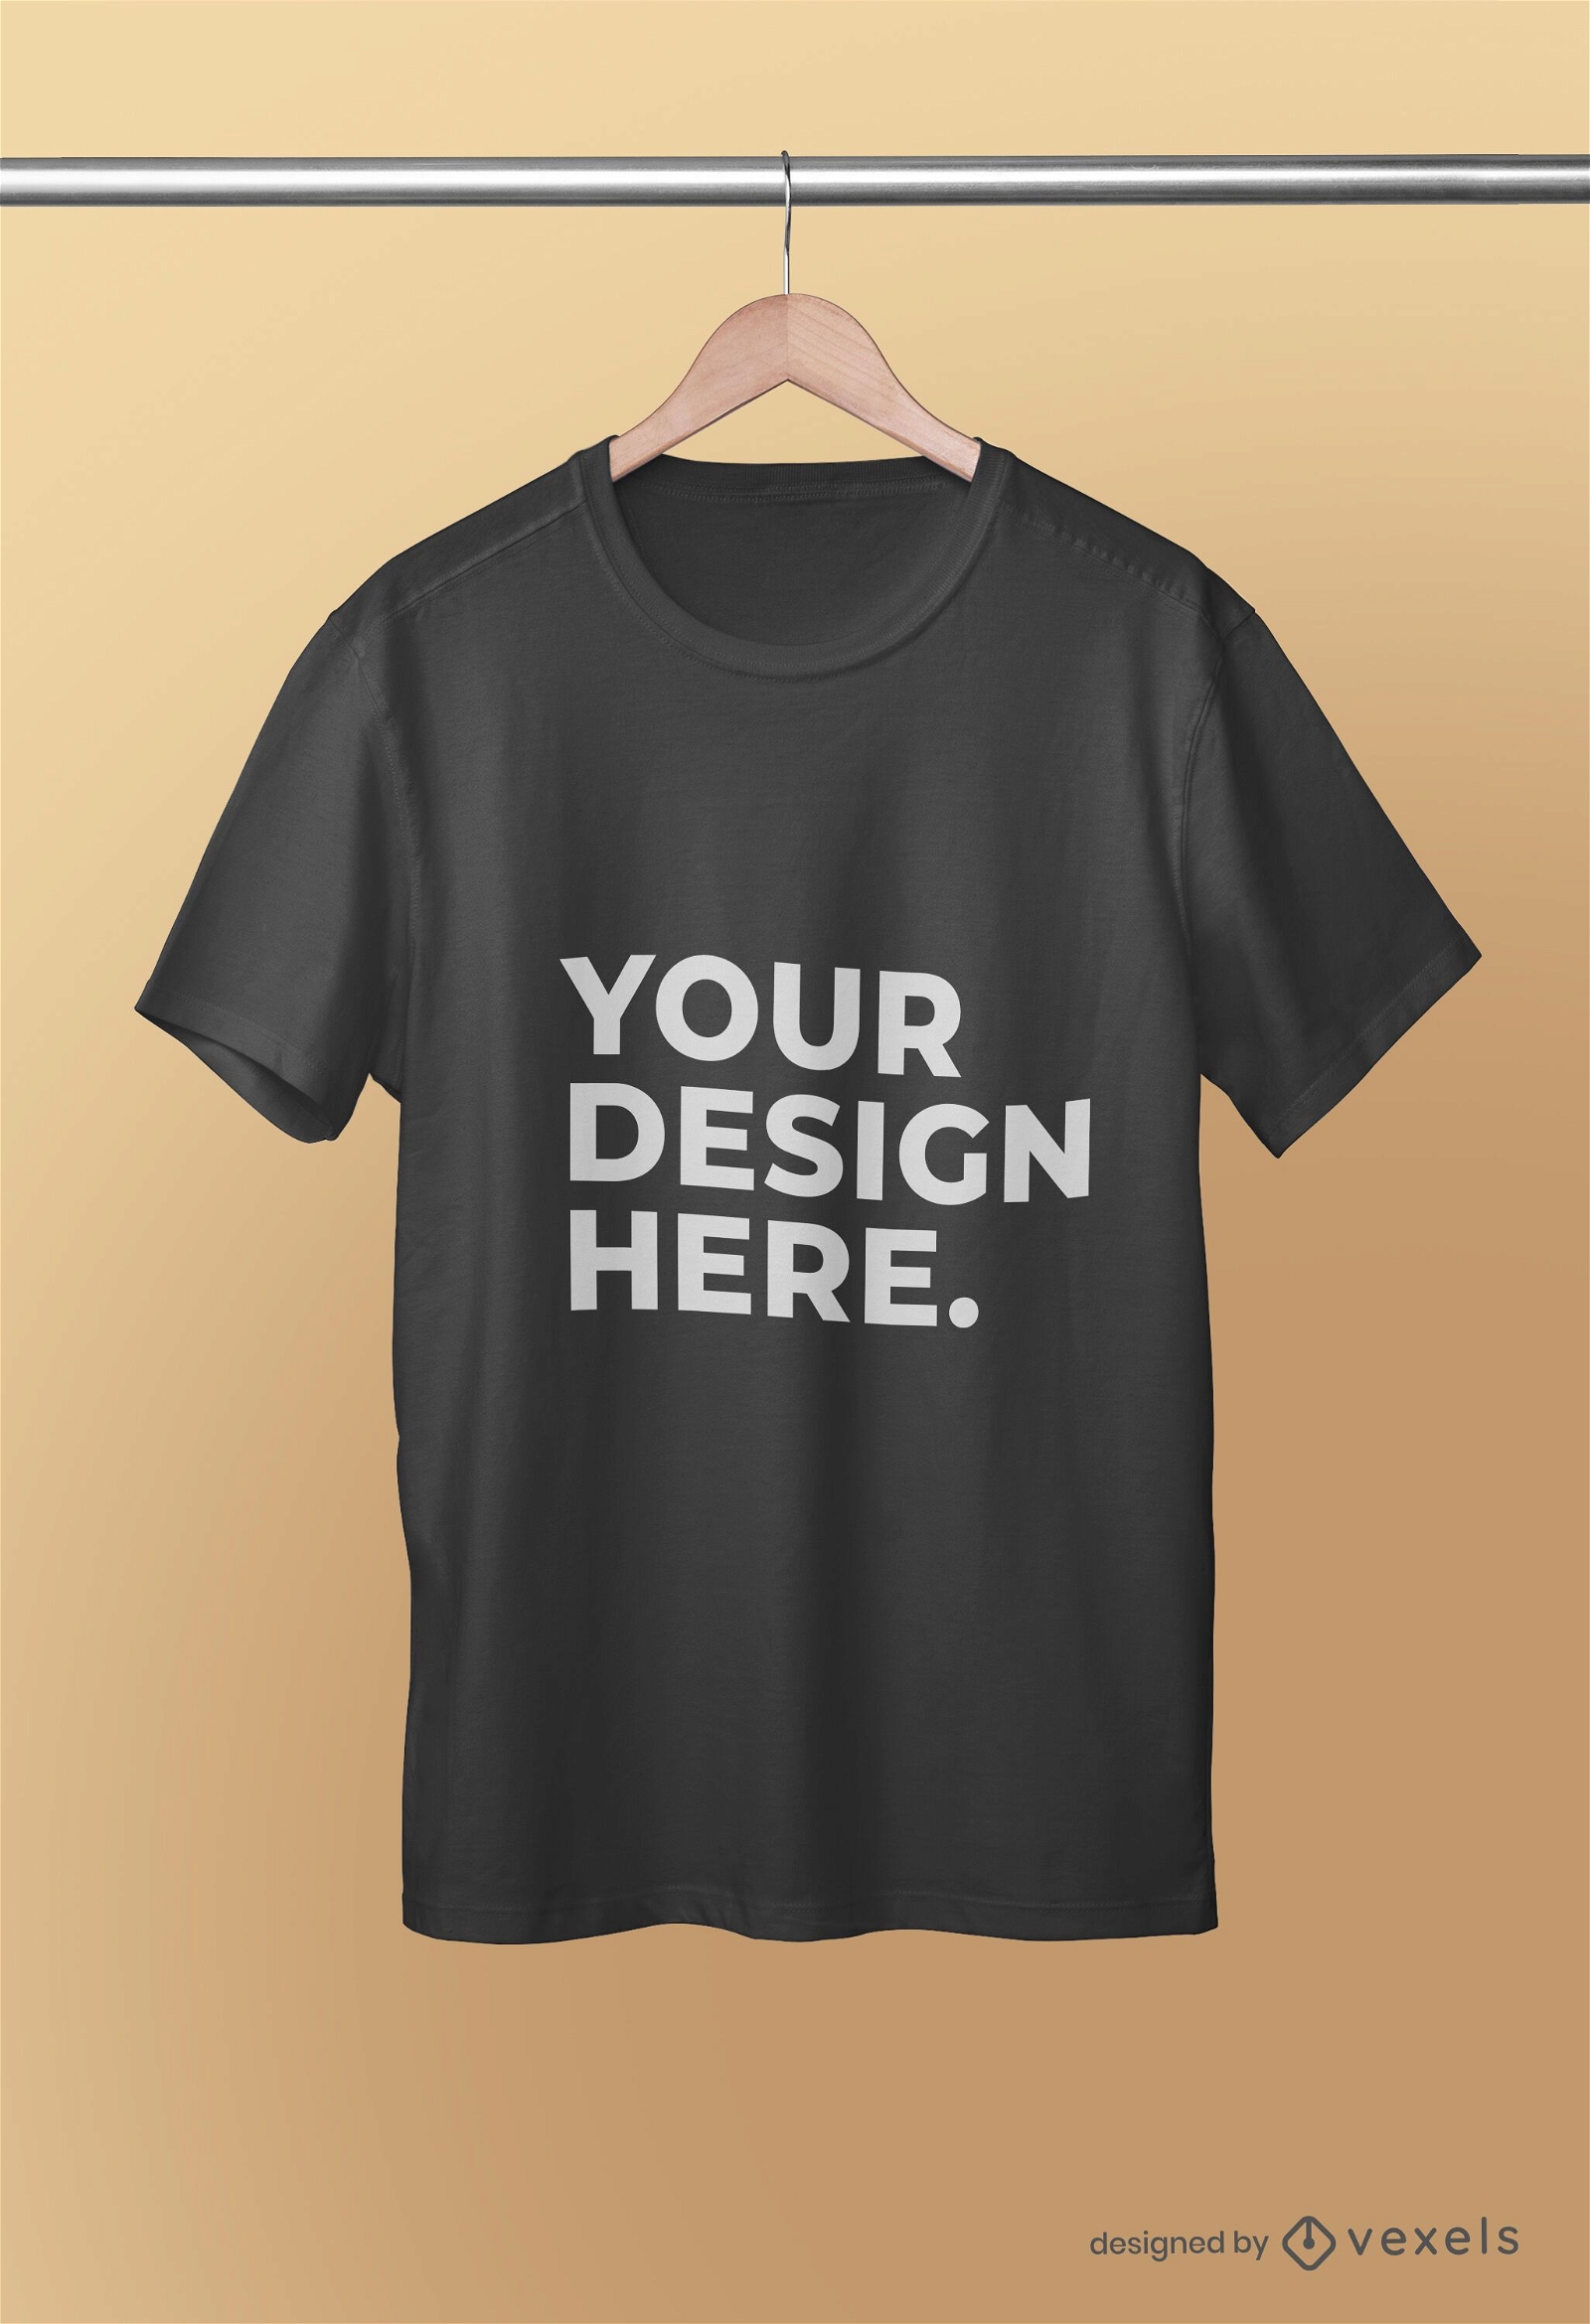 Hanged T-shirt Mockup Psd Design - PSD Mockup Download